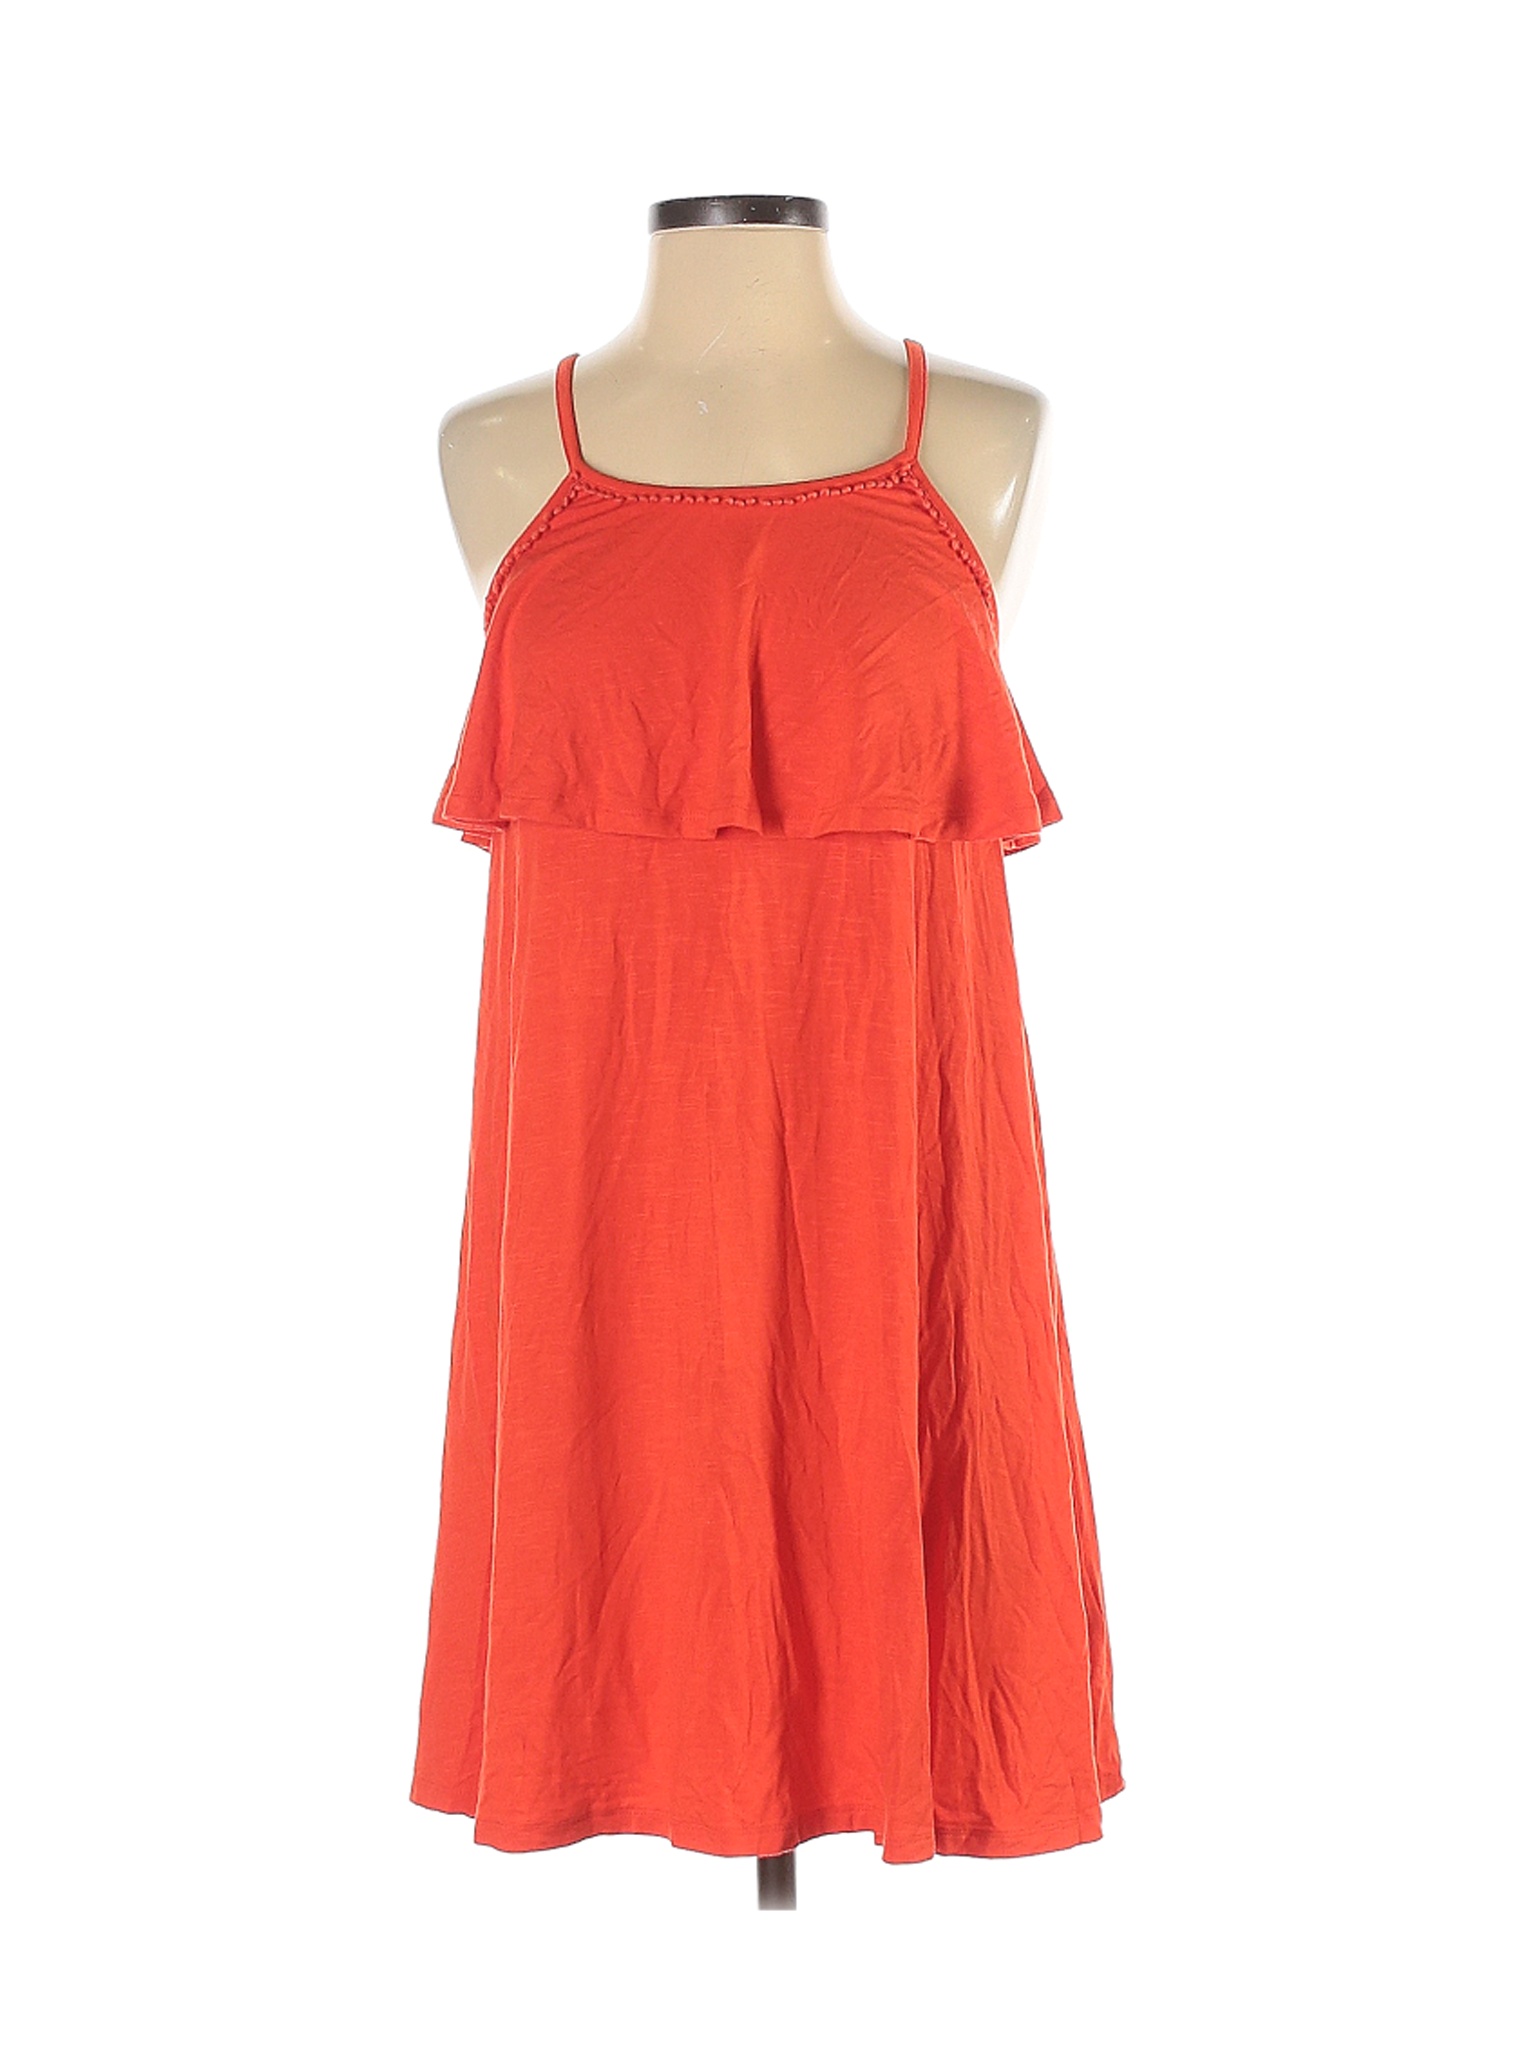 Old Navy Women Orange Casual Dress S | eBay